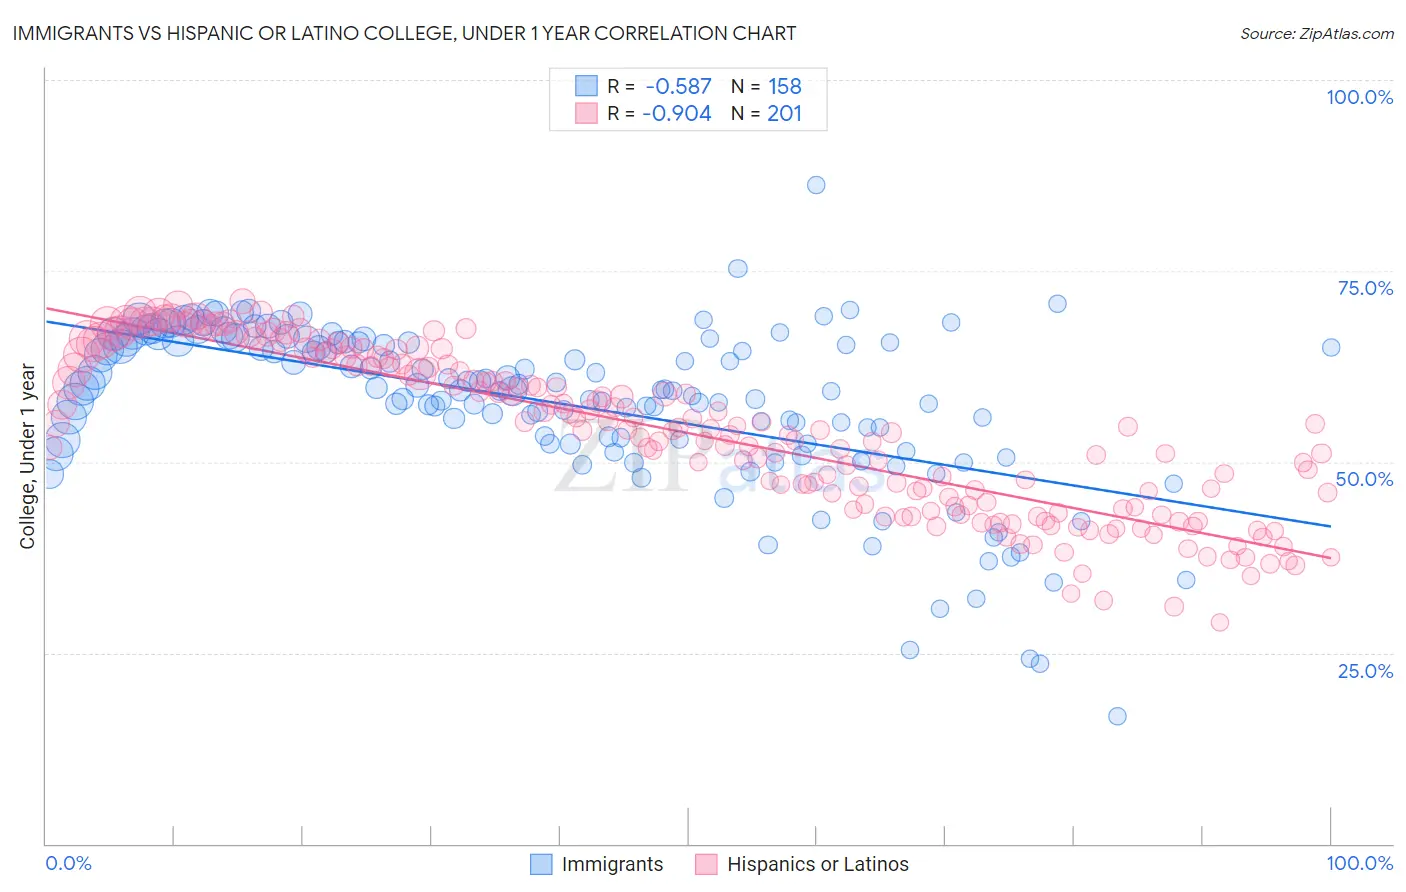 Immigrants vs Hispanic or Latino College, Under 1 year